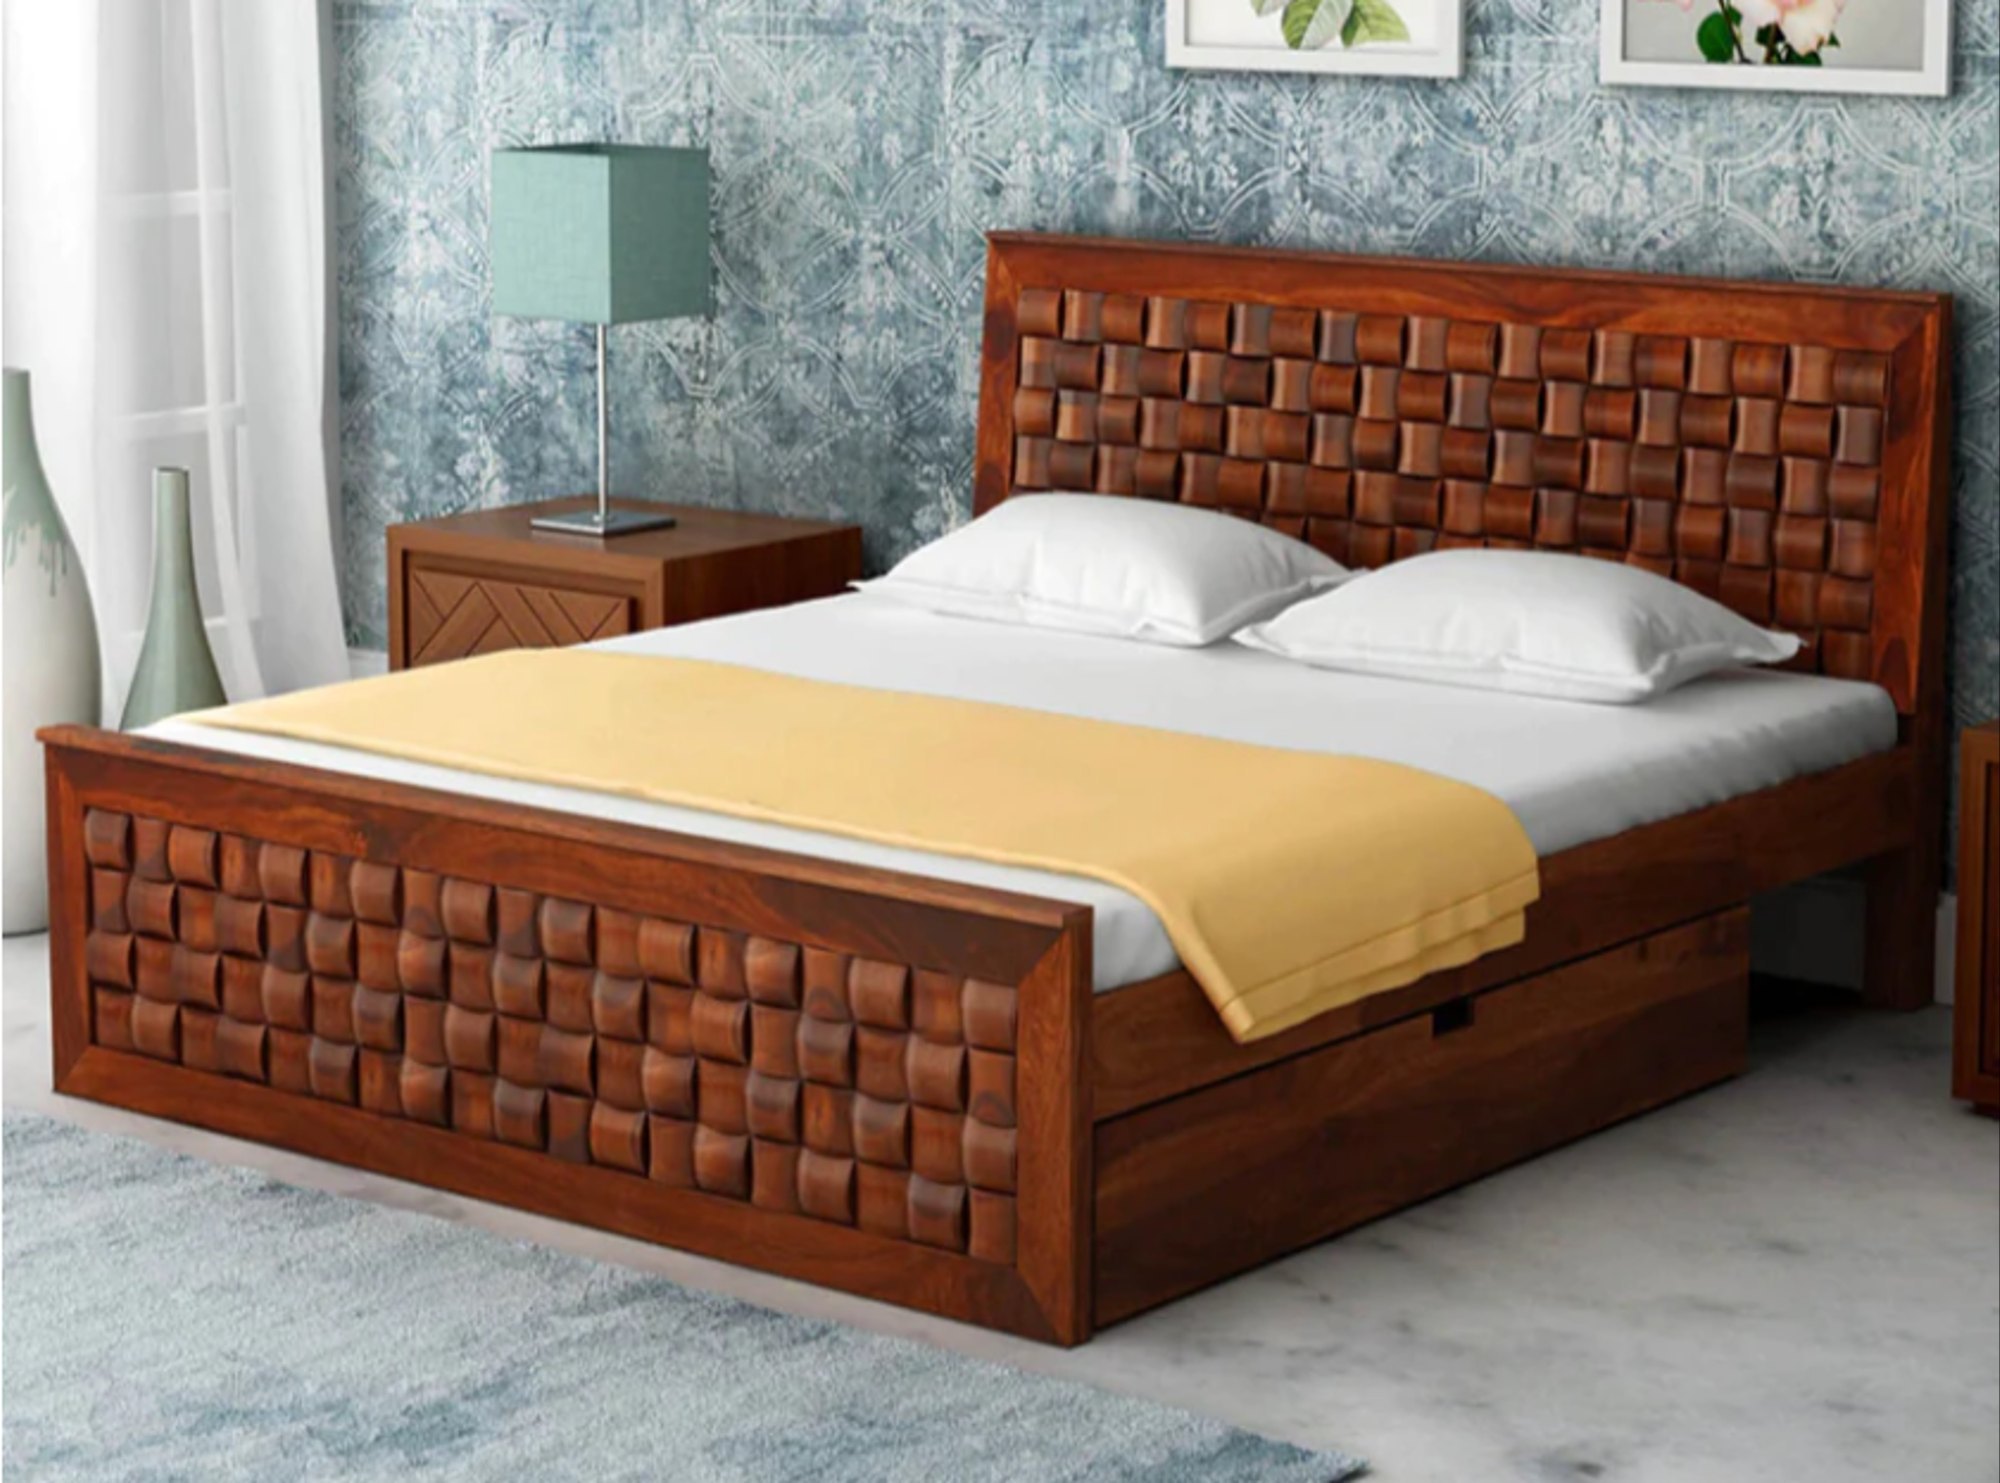 simple bed design 3